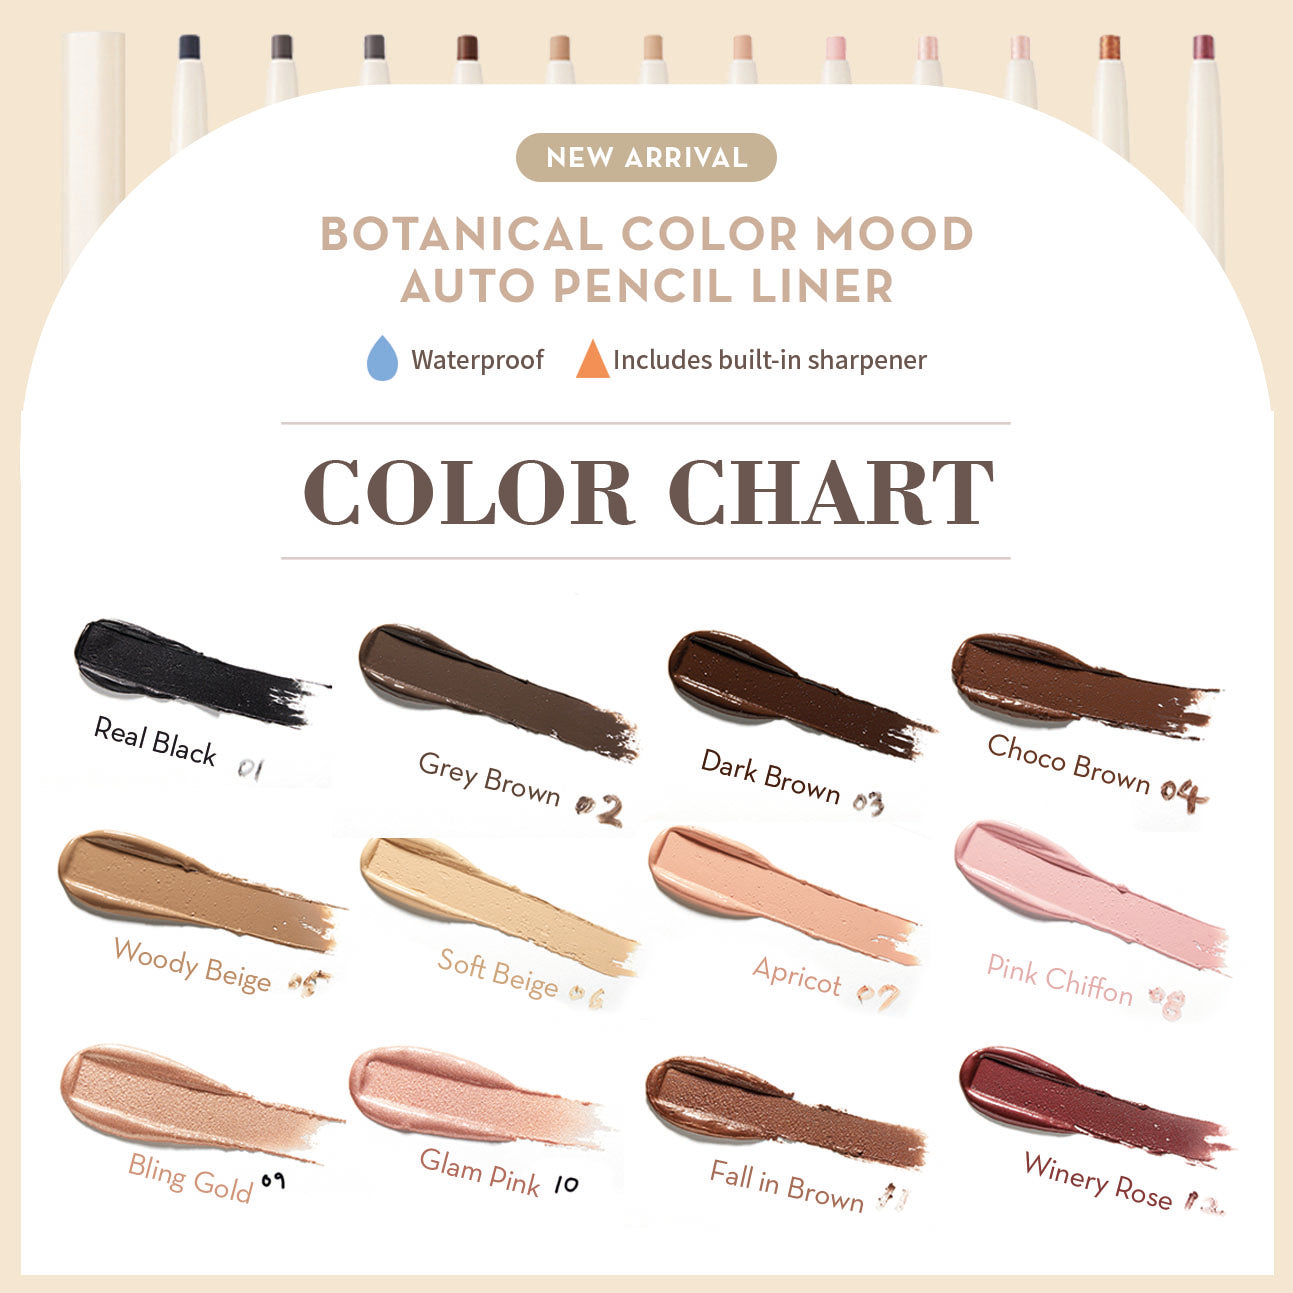 BOTANICAL Color Mood Auto Pencil Liner 04 Choco Brown